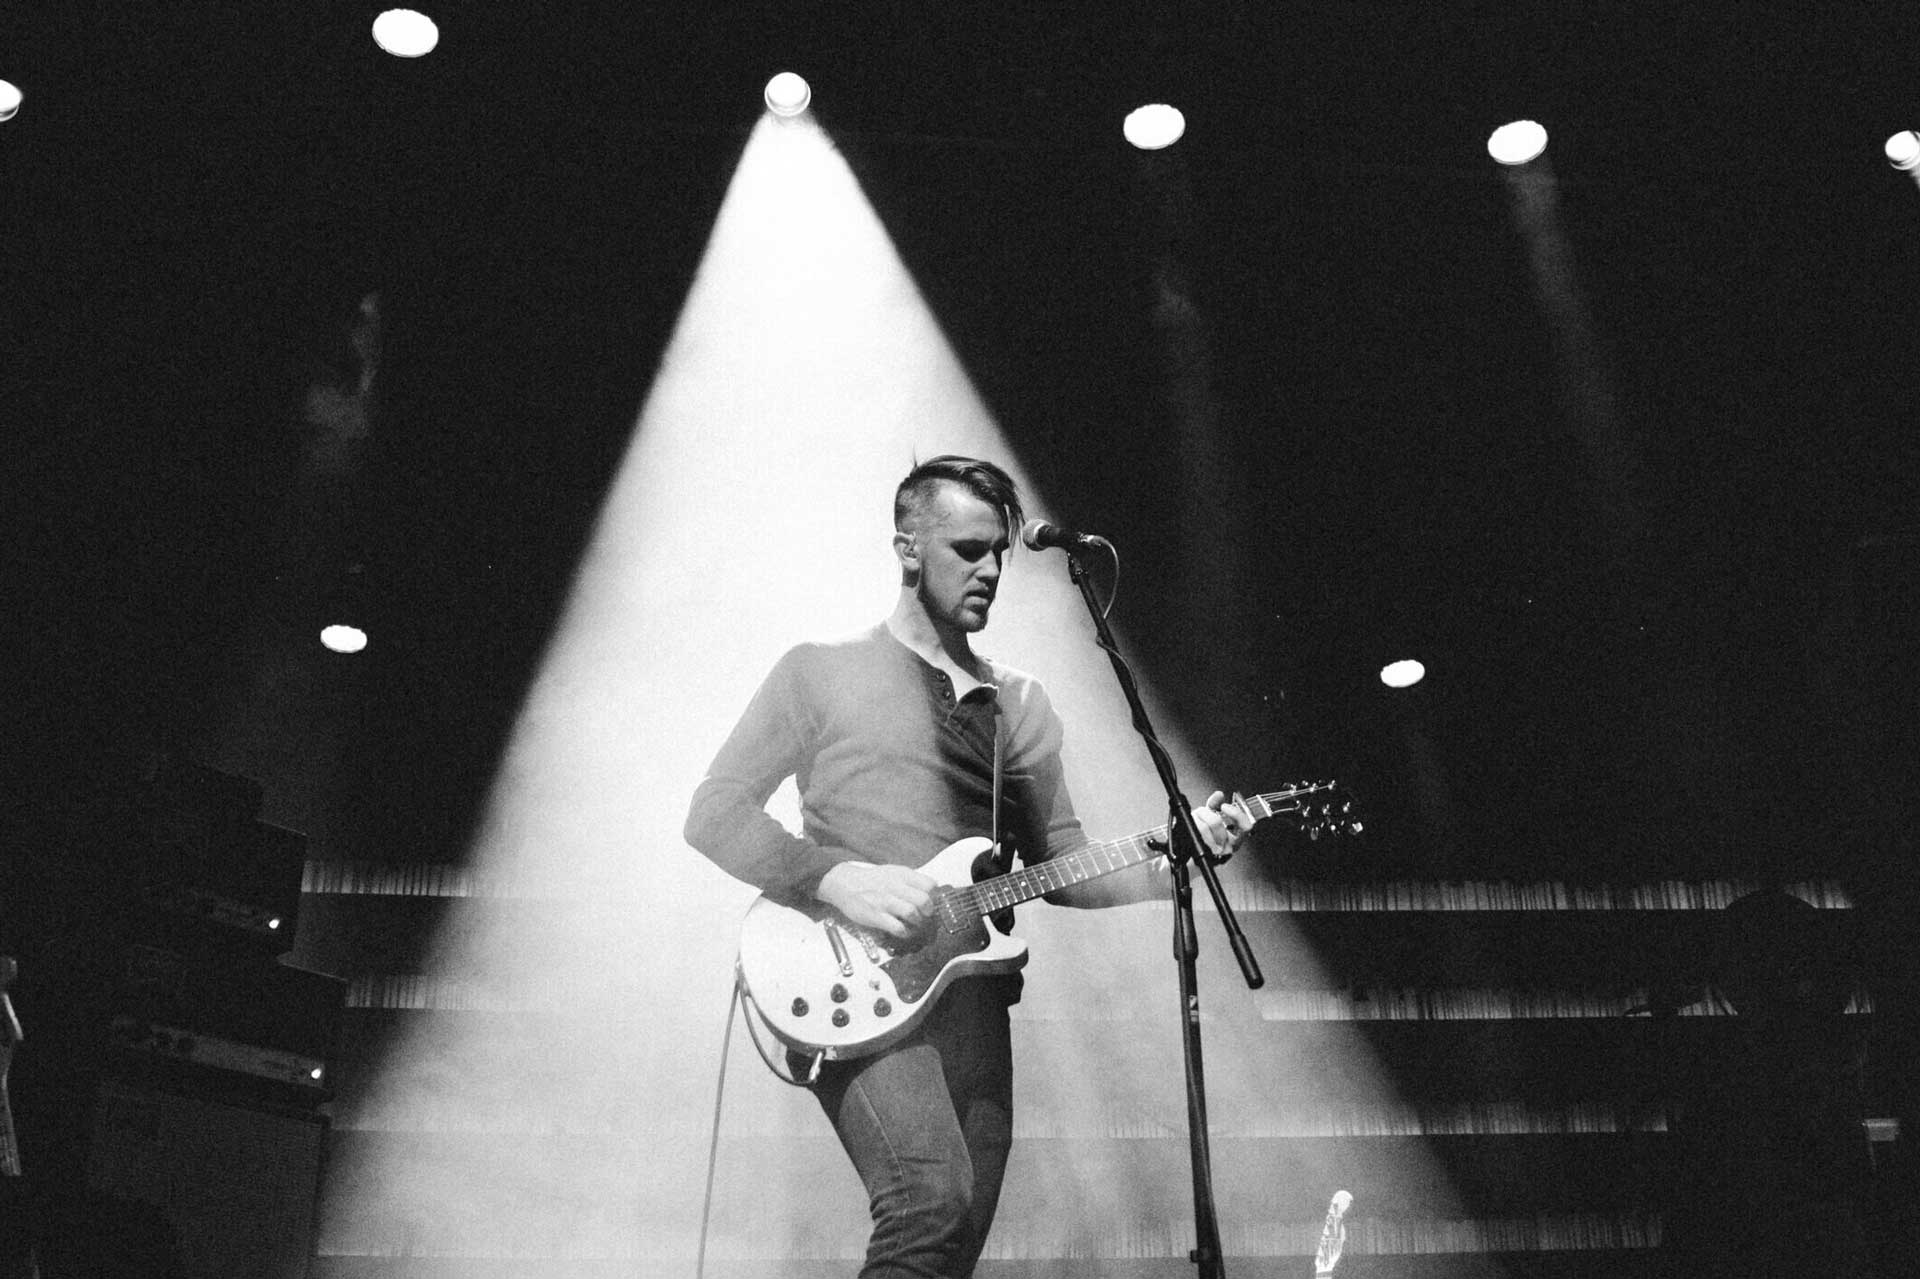 Musisi Peter Ferguson di atas panggung dengan gitar dan mikrofon di bawah lampu sorot